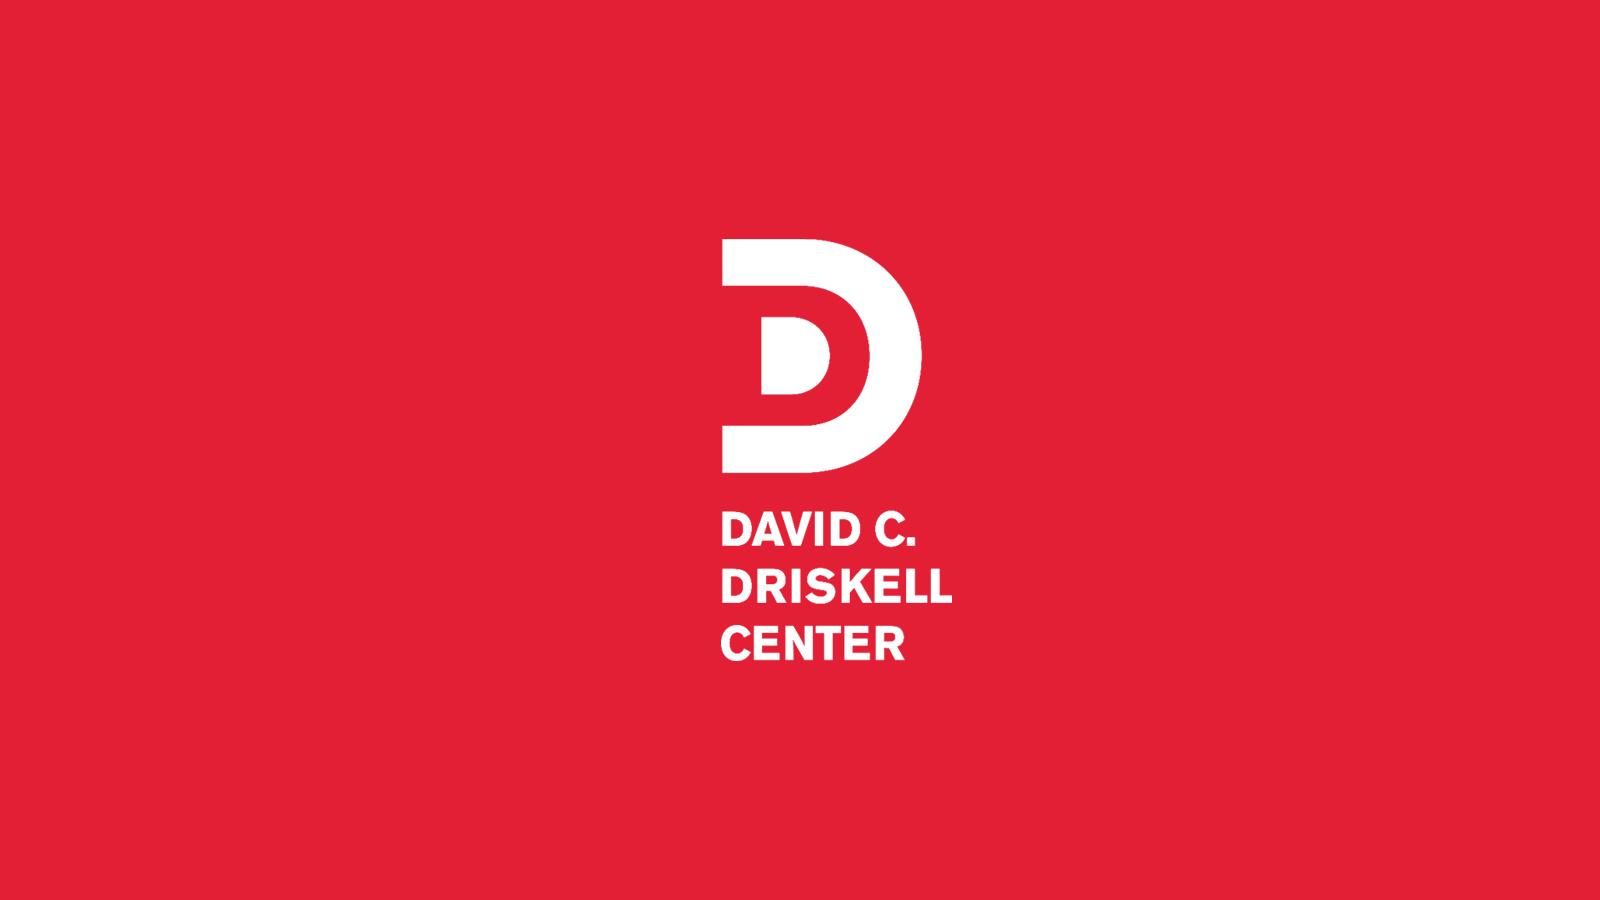 Driskell Center Default Inset Image